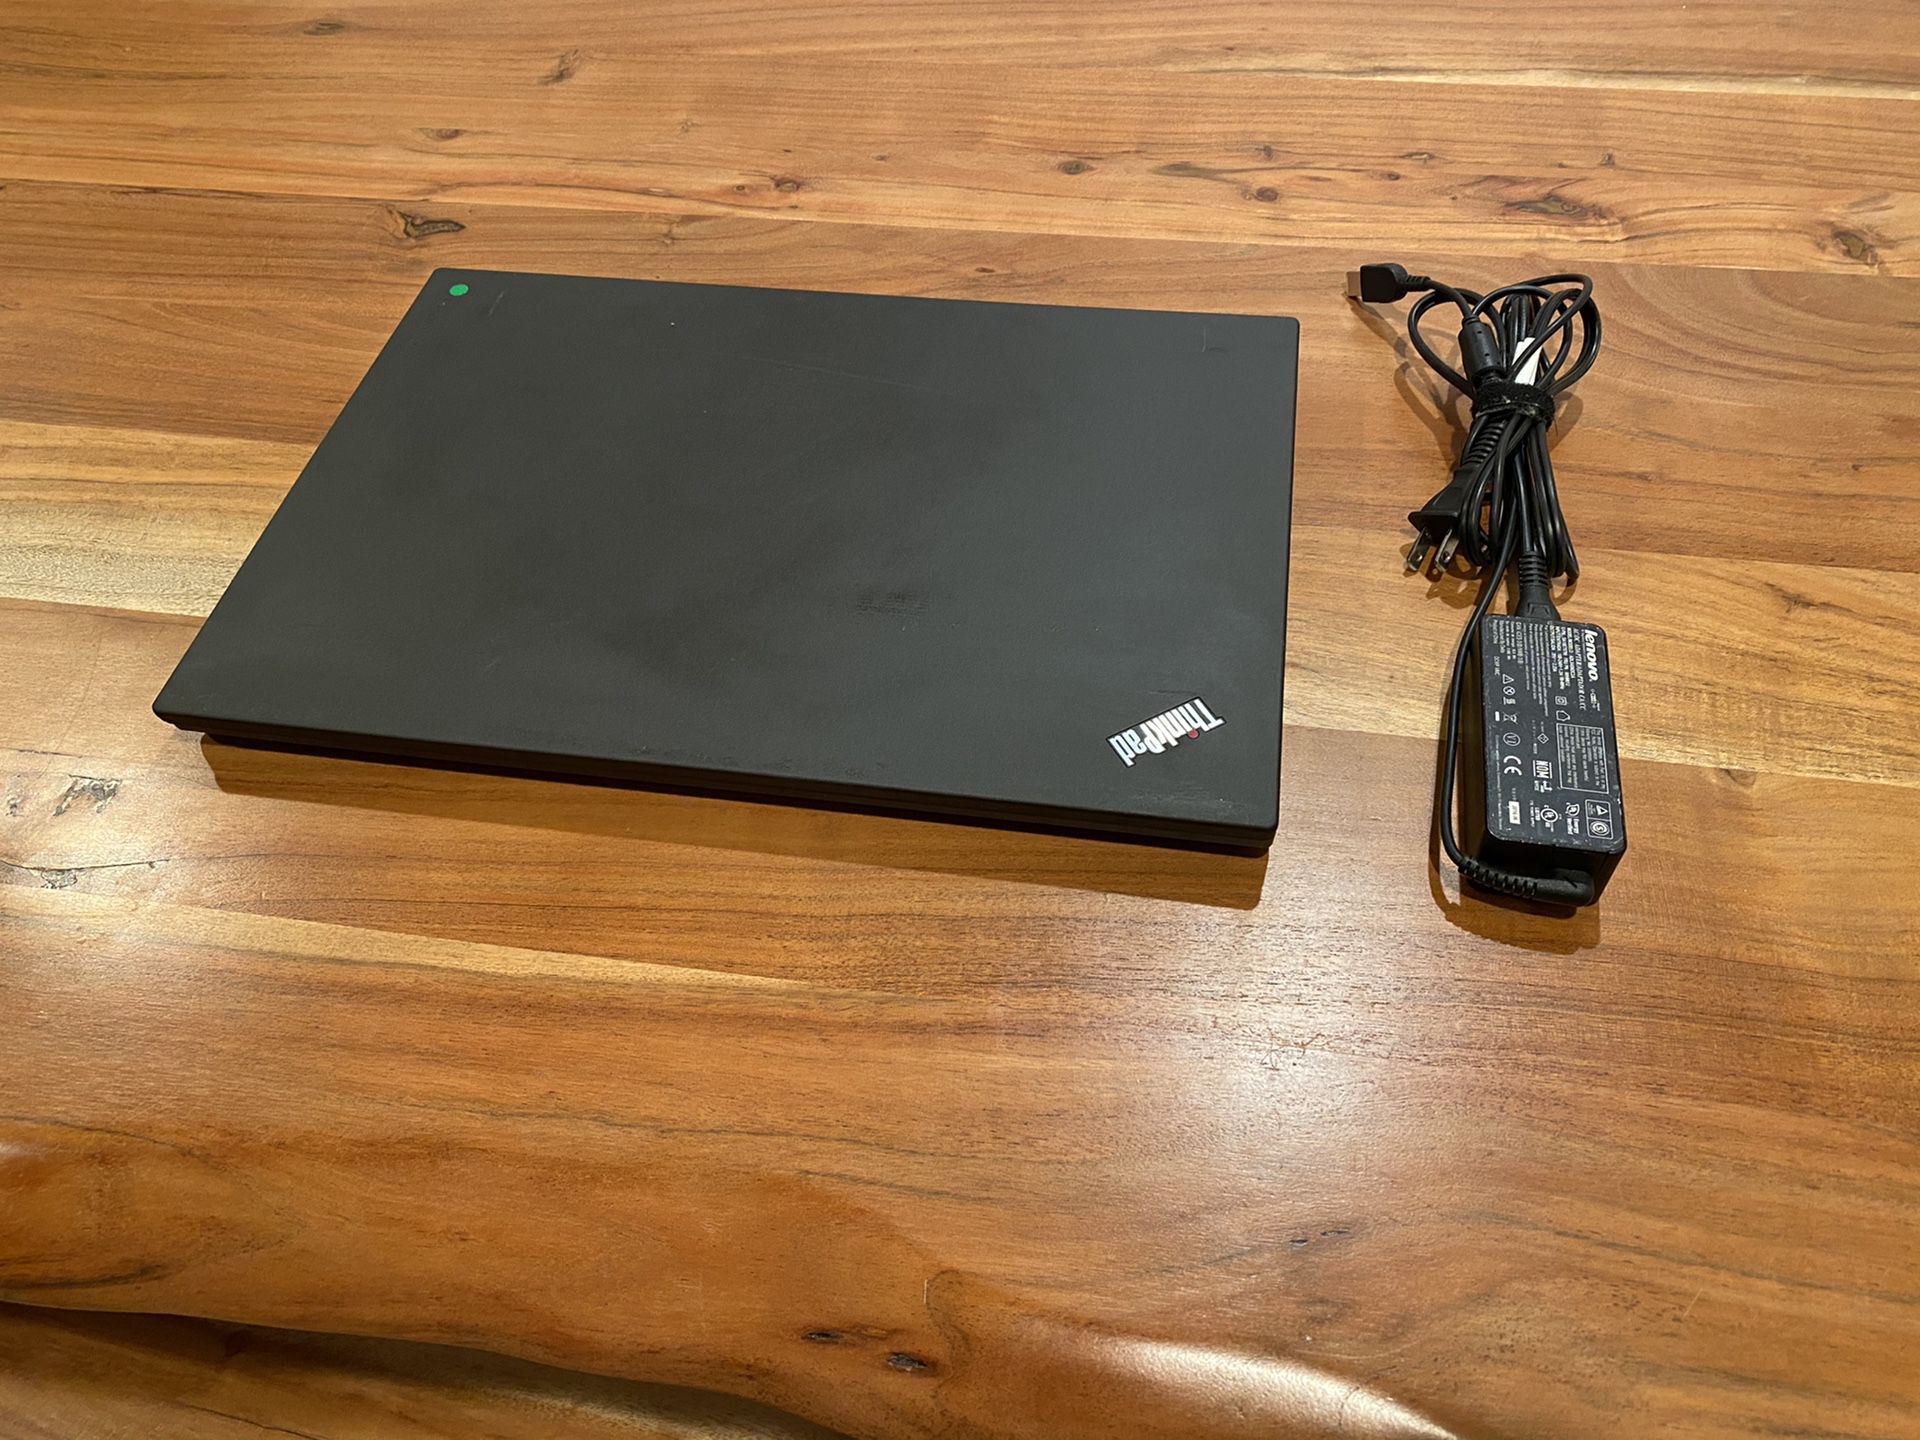 Lenovo Thinkpad T560 Laptop